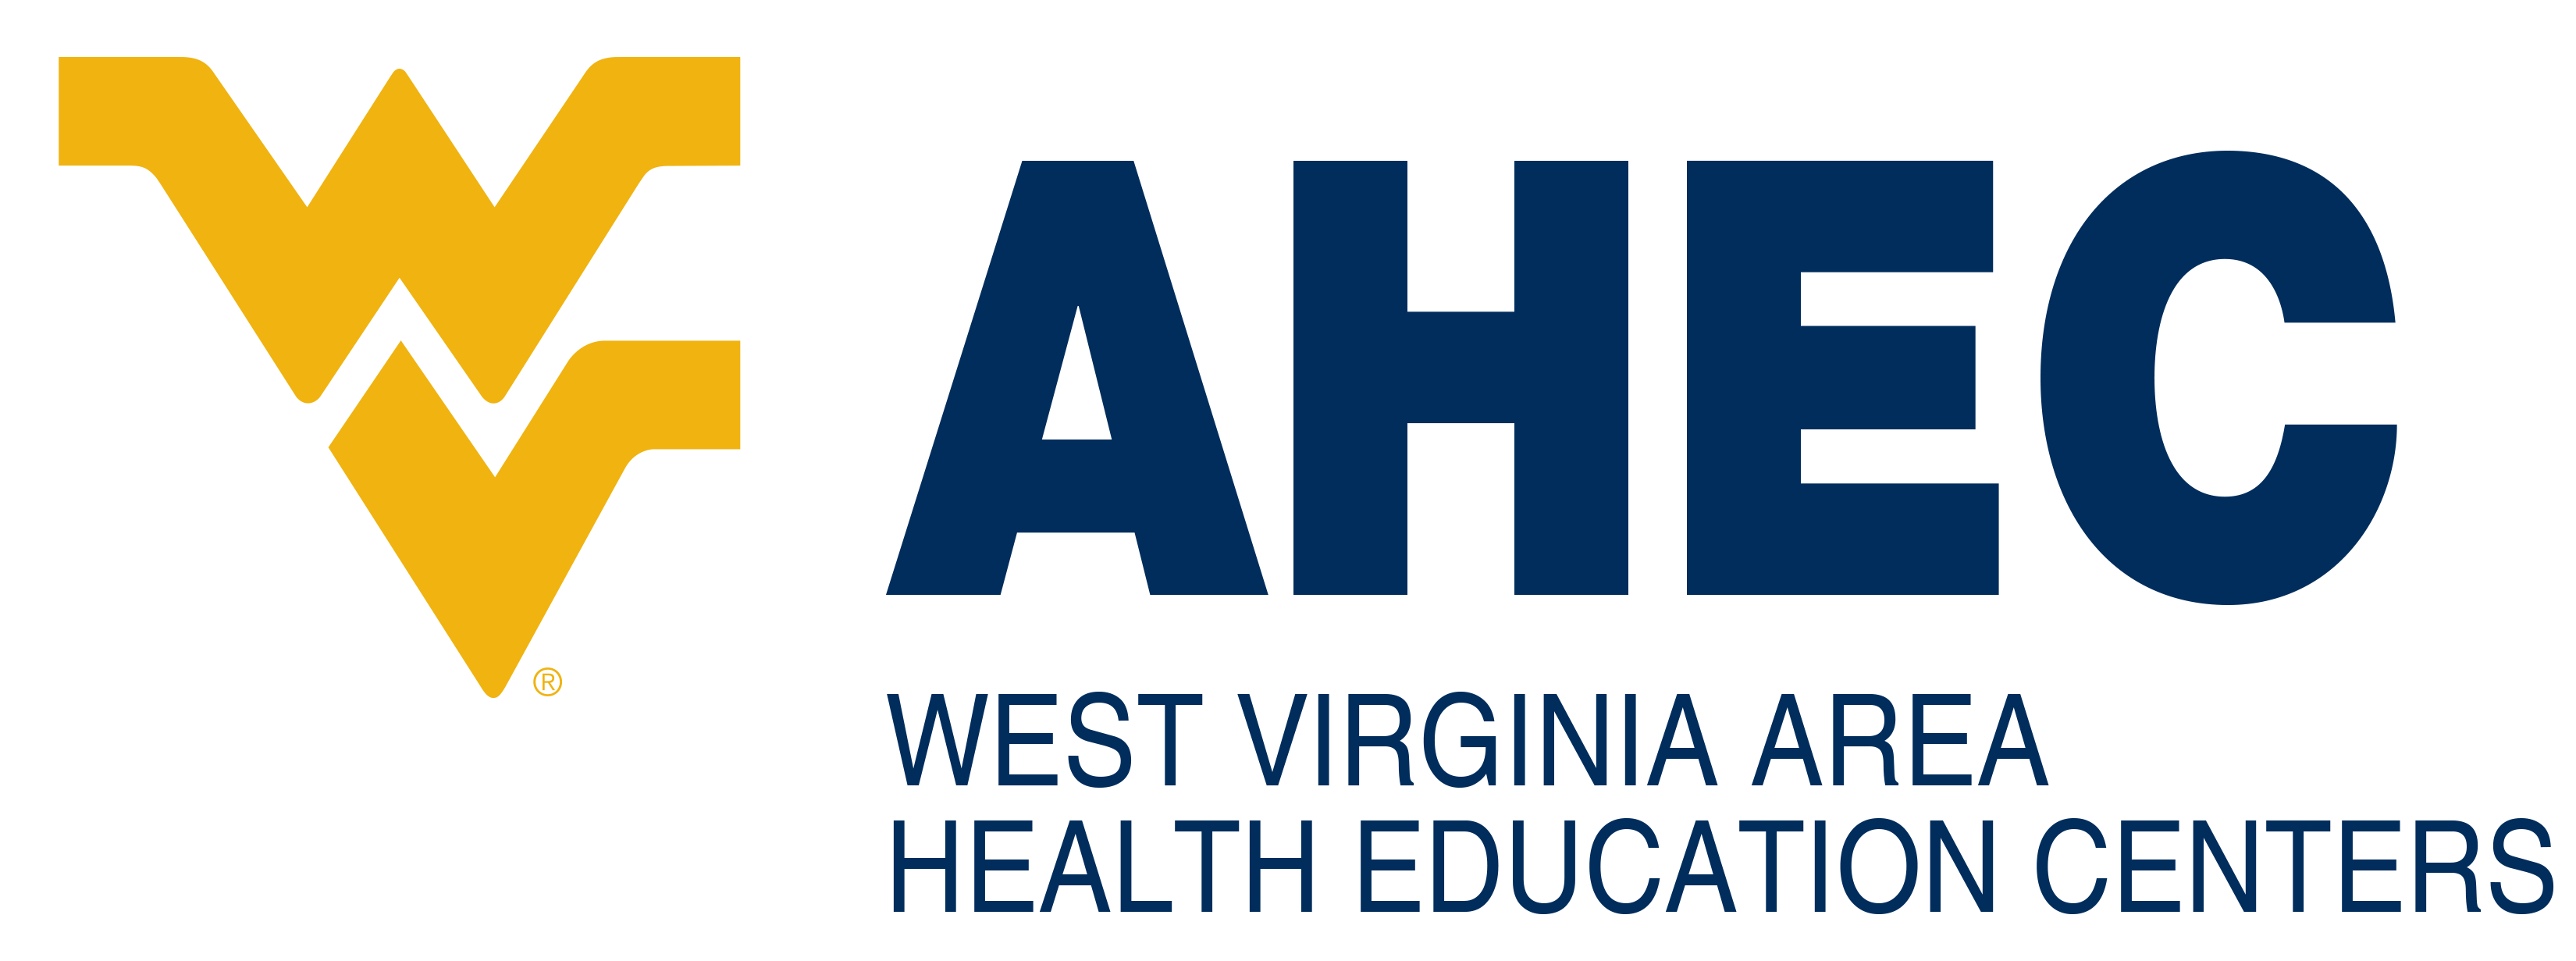 West Virginia Area Health Education Centers logo